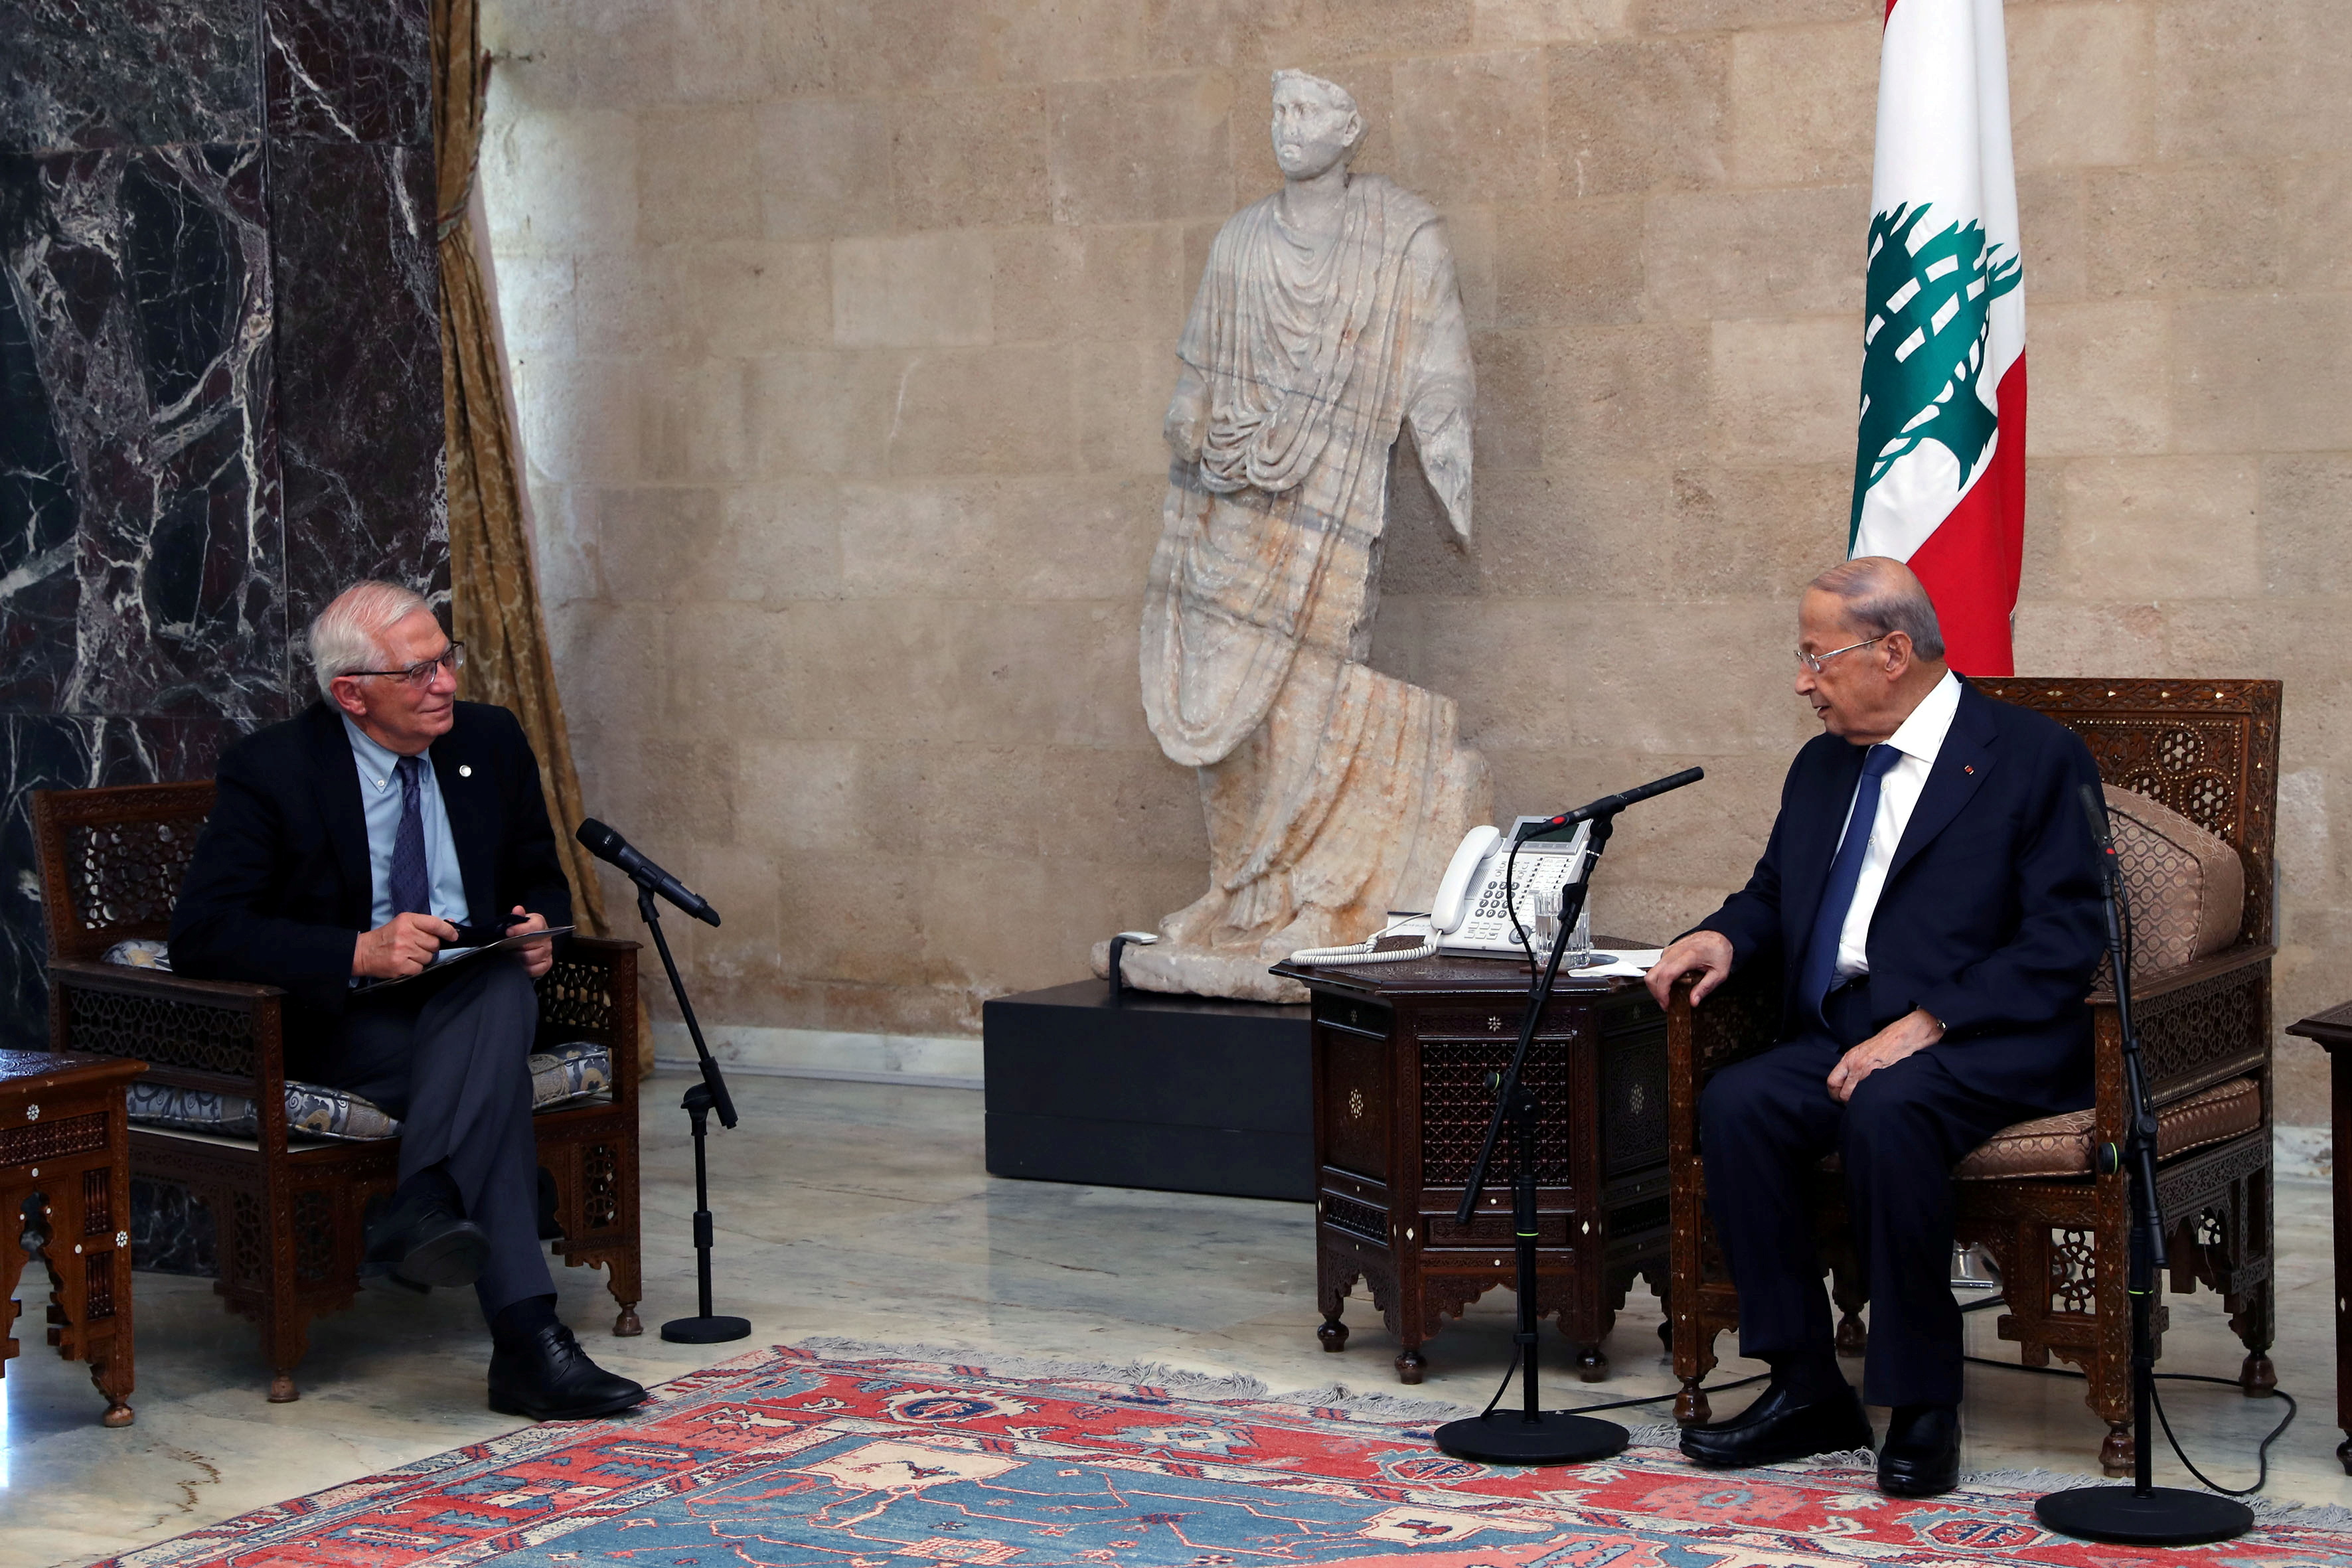 European Union foreign policy chief Borrell meets with Lebanon's President Aoun in Baabda